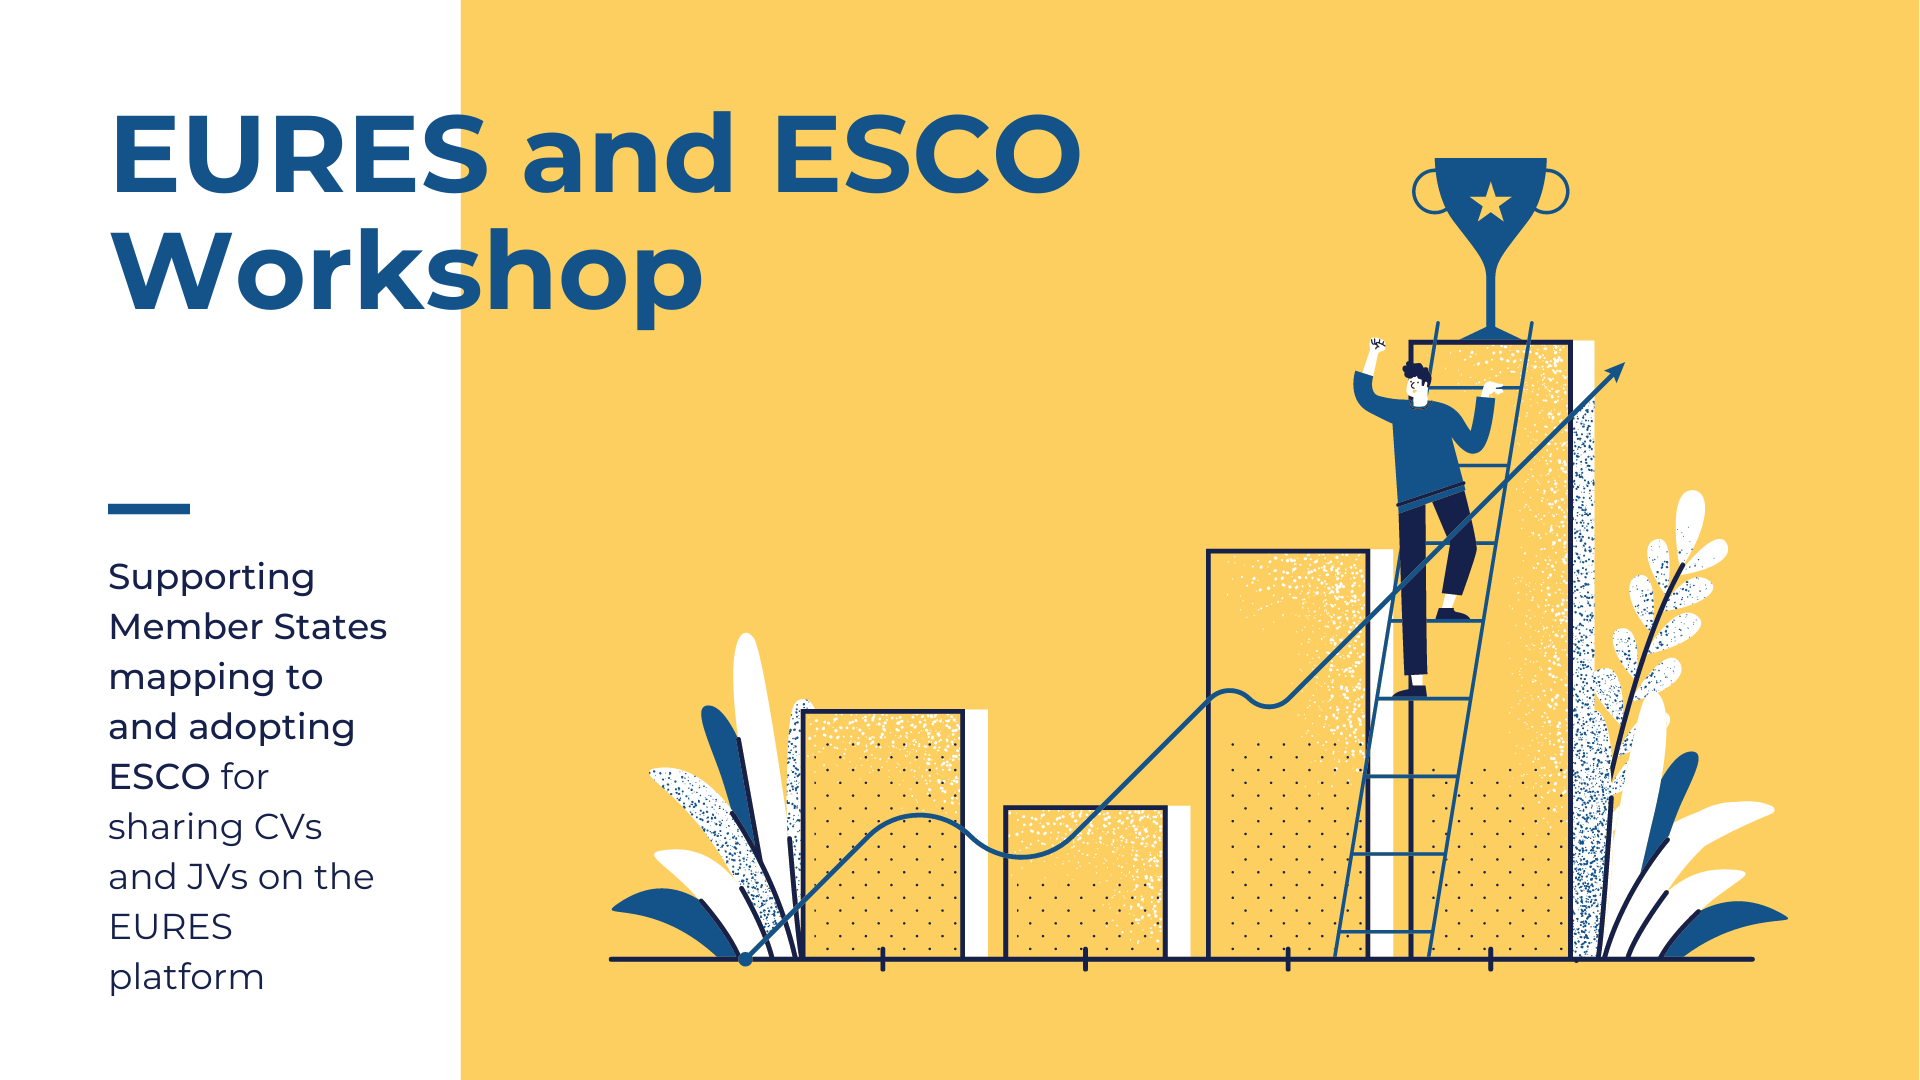 Image: EURES and ESCO Workshop - Enhancing Job Mobility